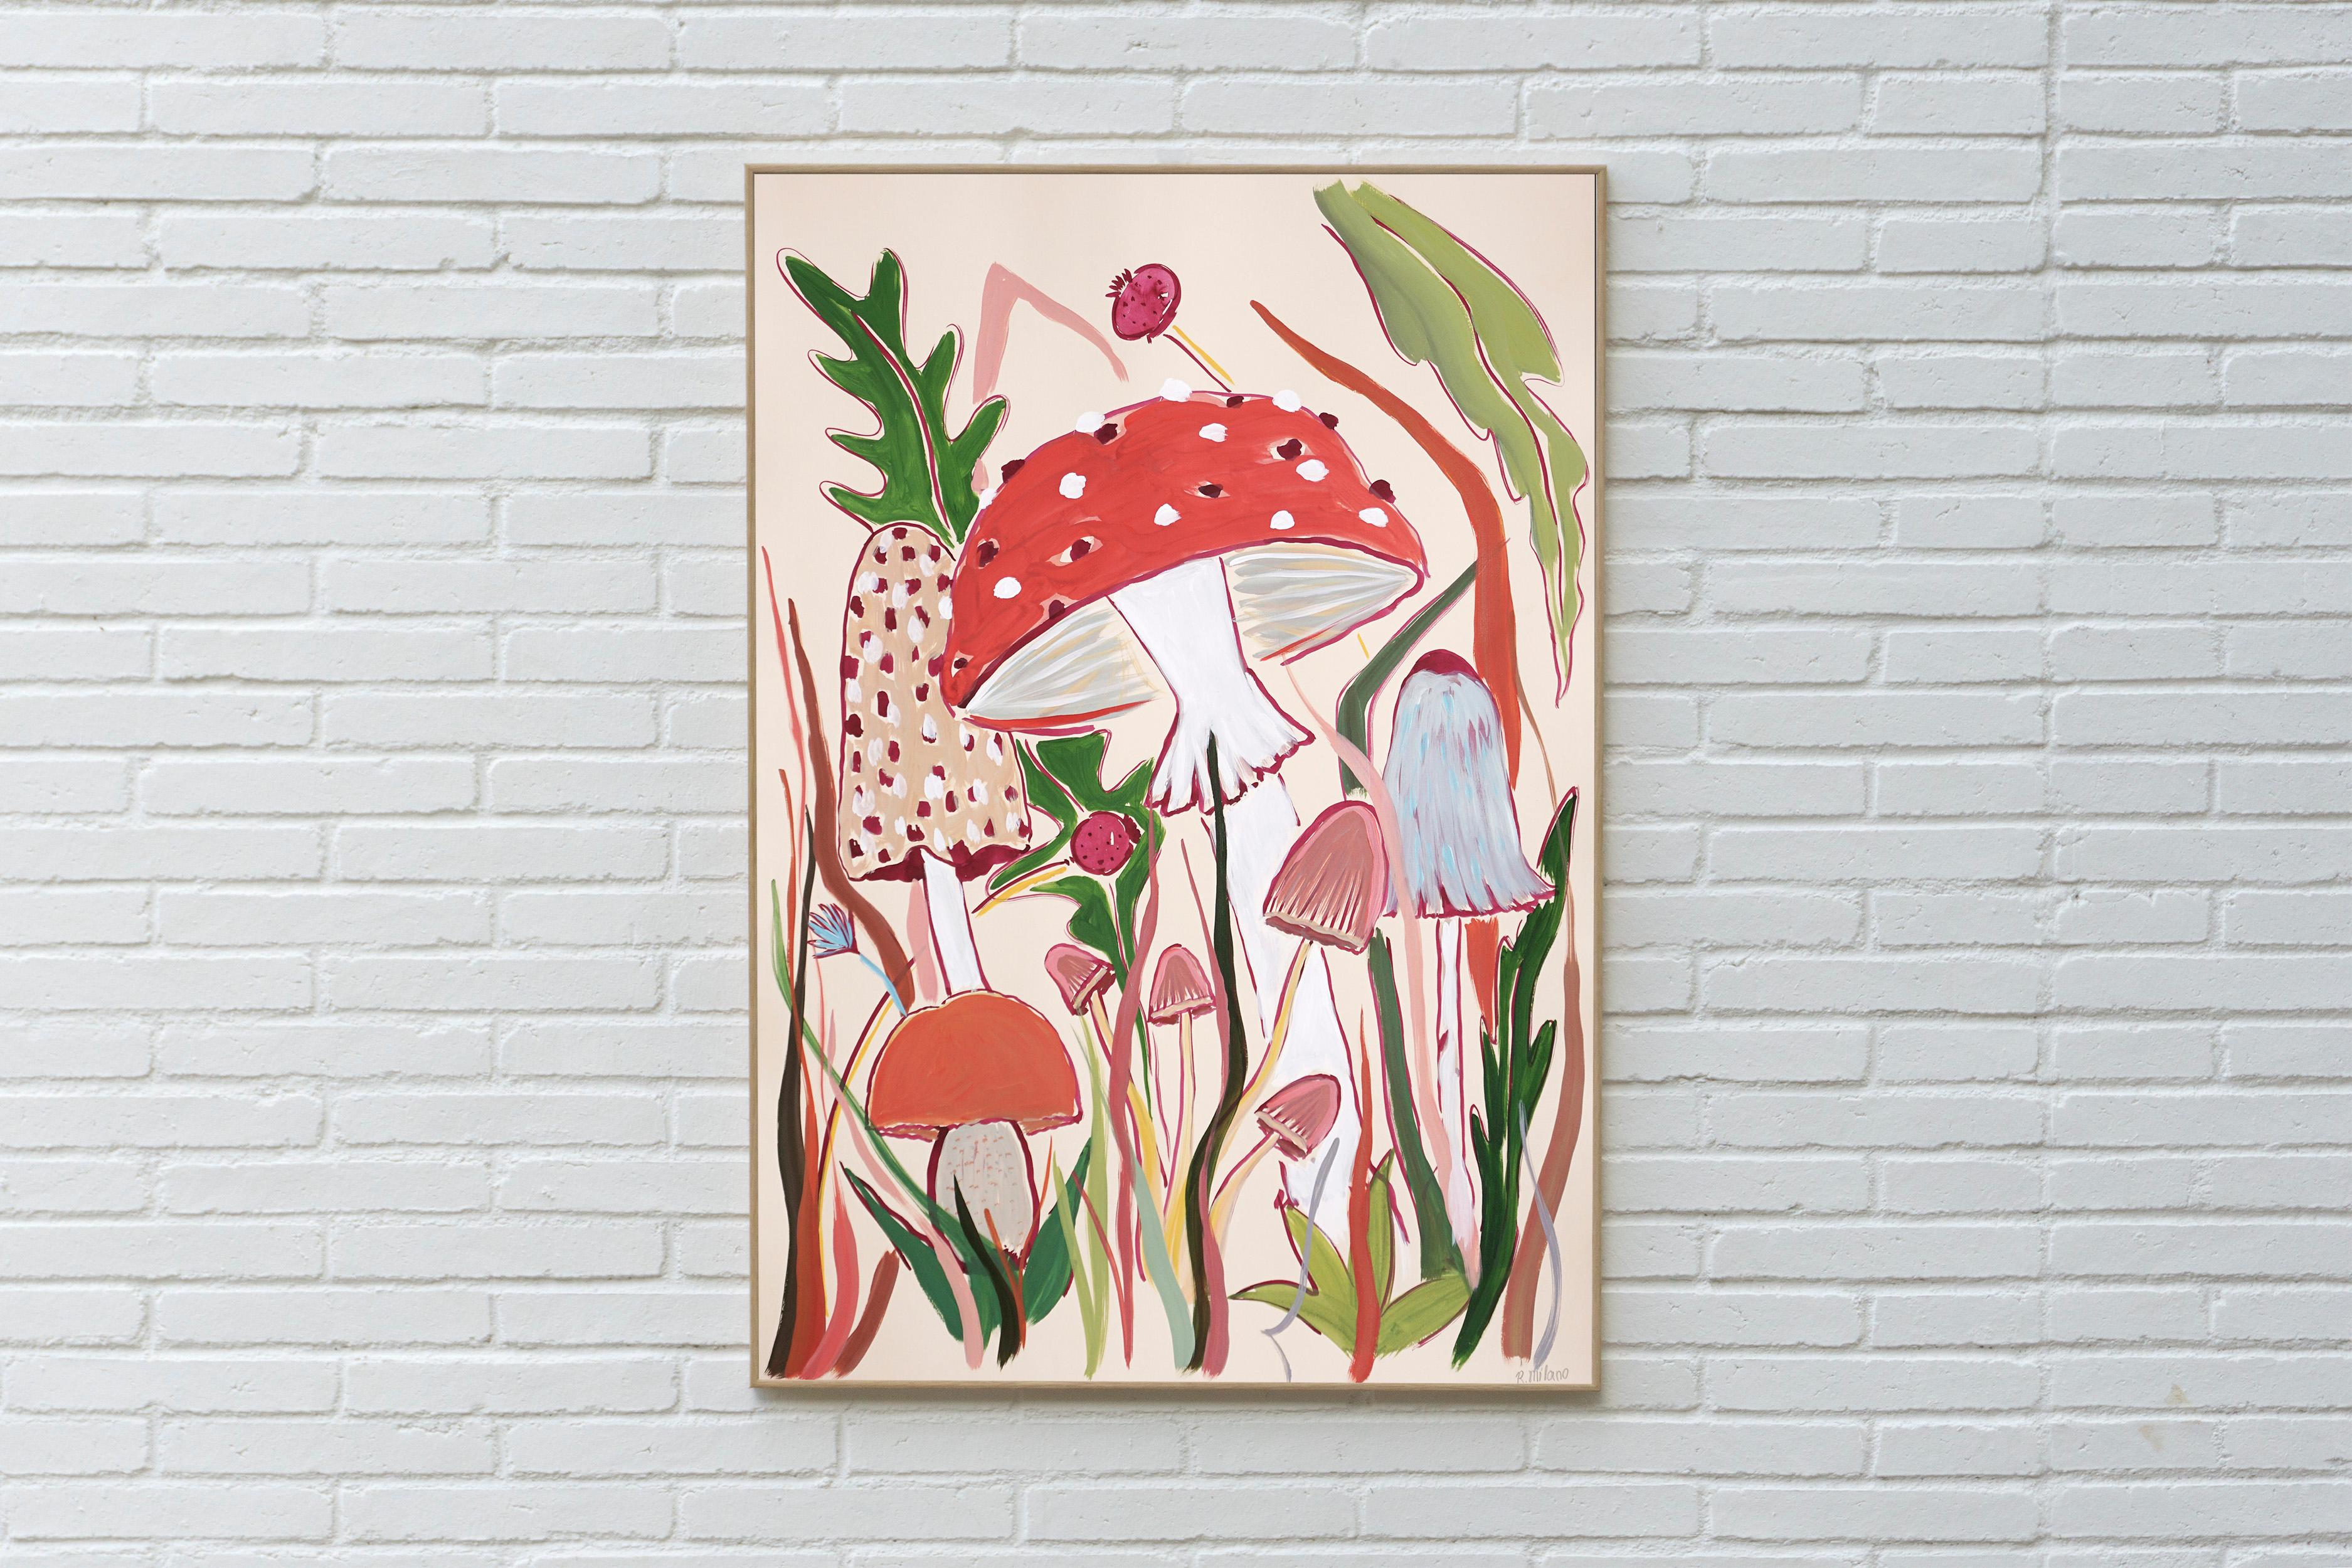 Wild Mushrooms Harvest, Autumn, Magic Nature, Illustration Style, Red Warm Tones - Painting by Romina Milano